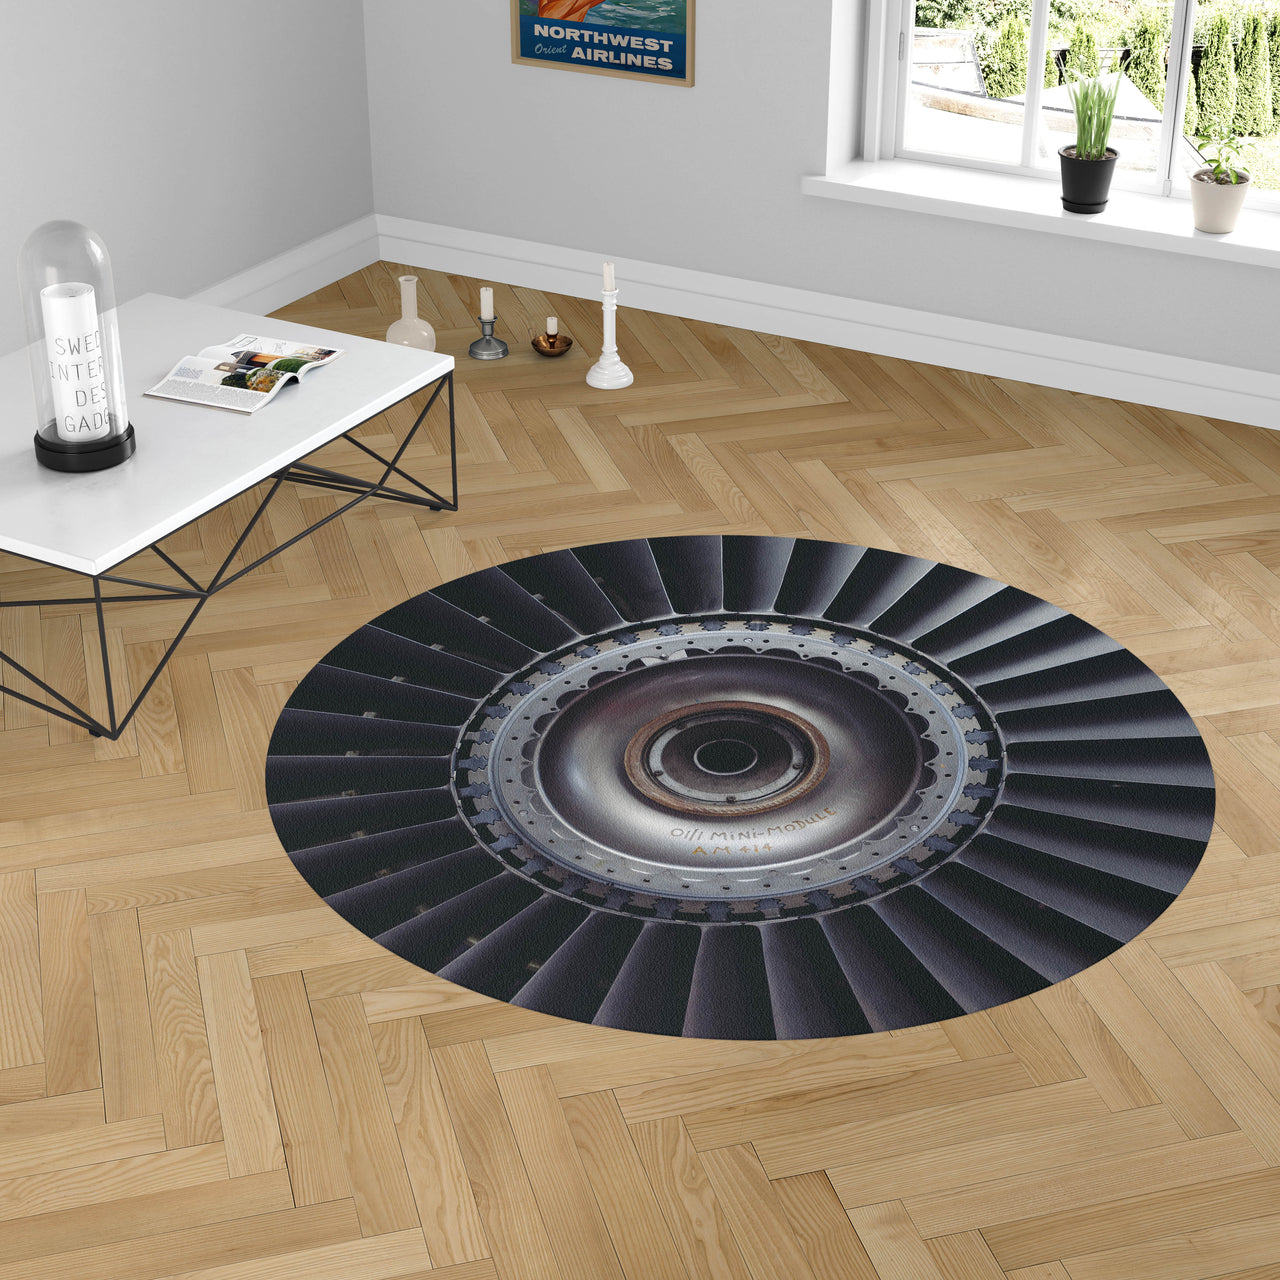 Real Jet Engine Designed Carpet & Floor Mats (Round)